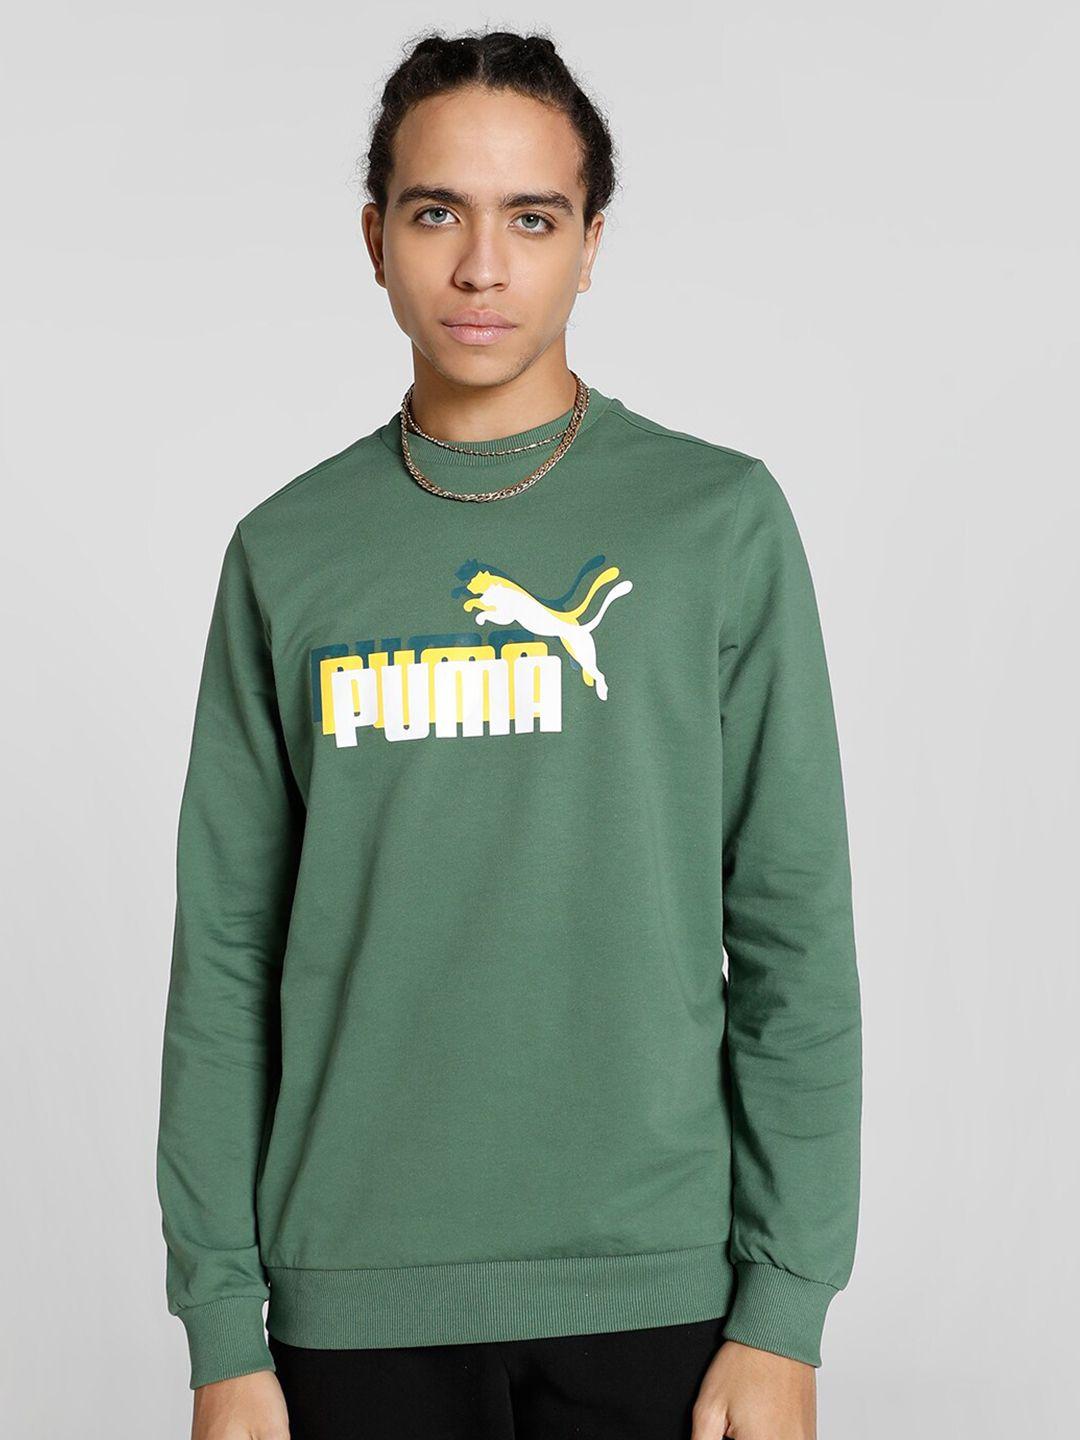 Puma Graphic Printed Crew Neck Cotton Sweatshirt